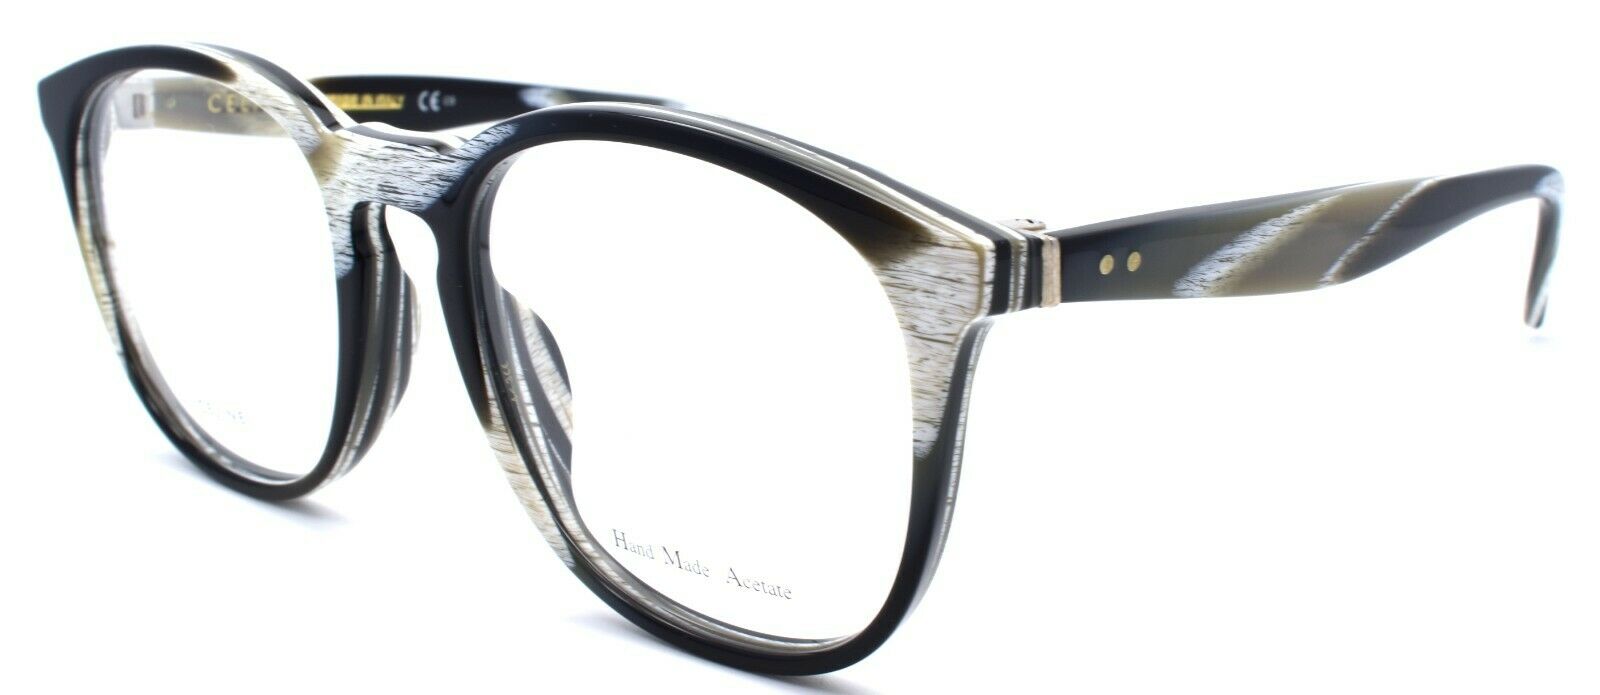 1-Celine CL 41353 5MY Thin Donnie Eyeglasses Frames 53-20-145 Dark Horn Italy-762753729675-IKSpecs